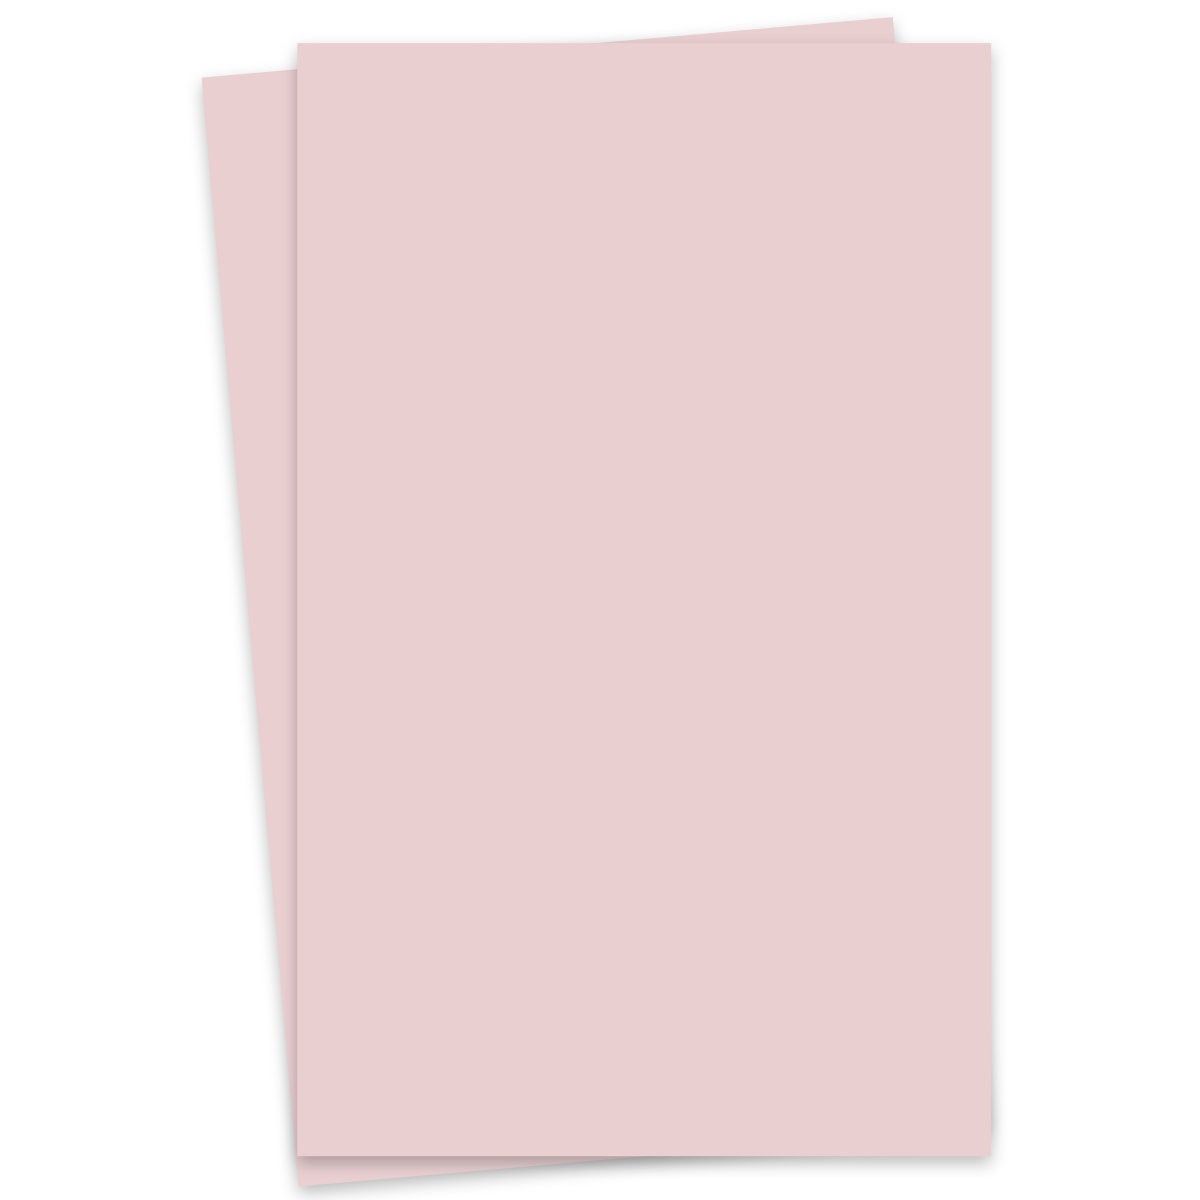 Burano Grey (12) - 11X17 Cardstock Paper - 92Lb Cover (250Gsm